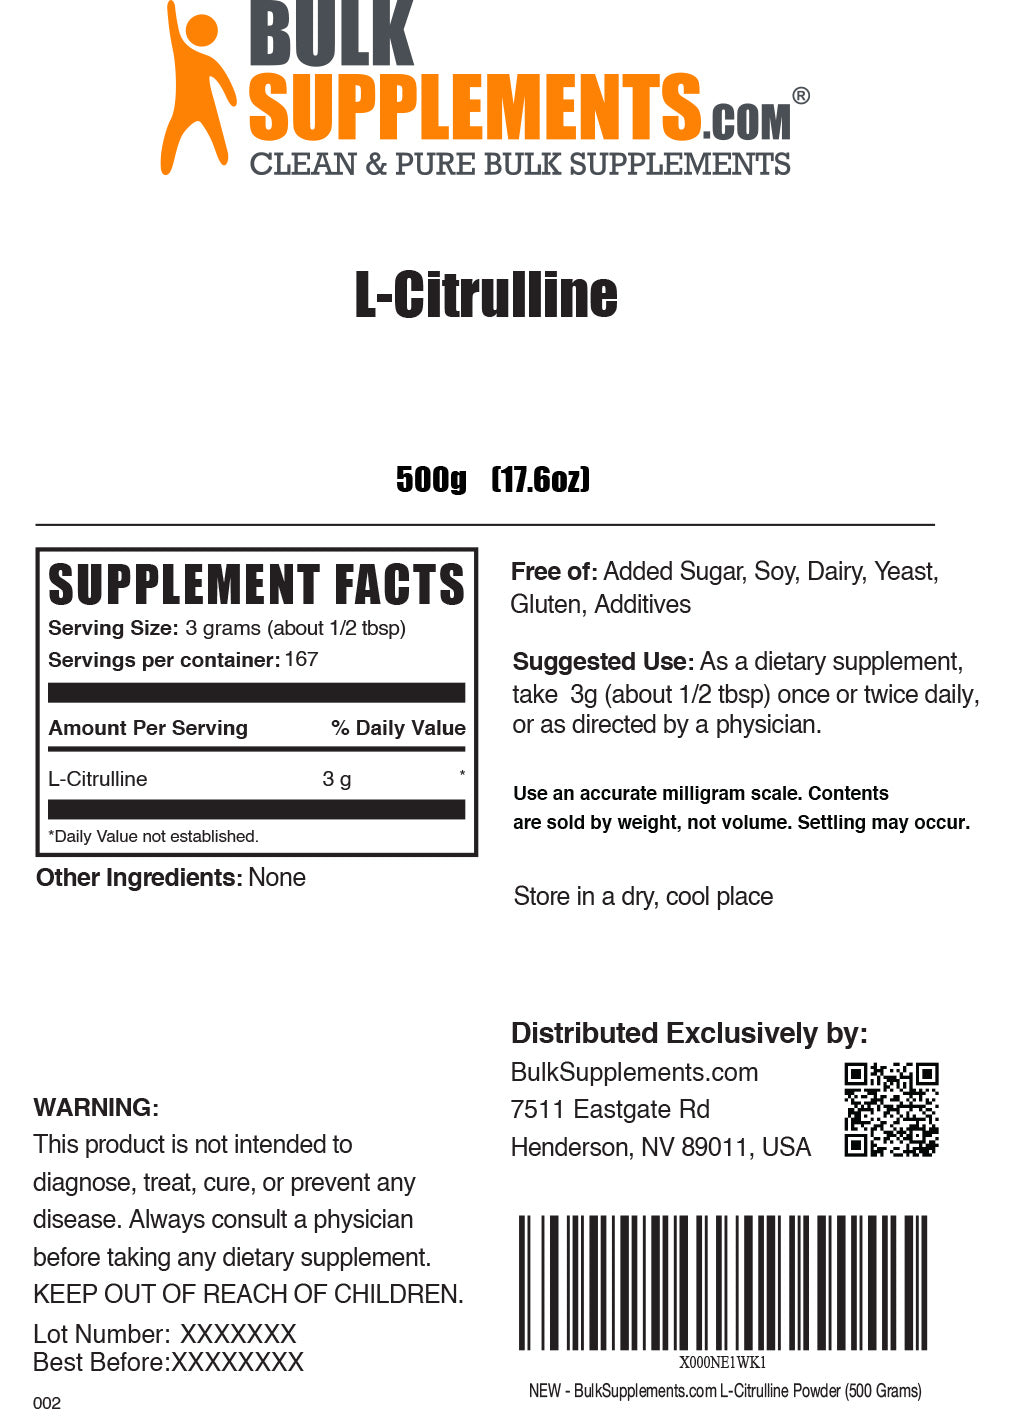 L-Citrulline Powder Label 500g